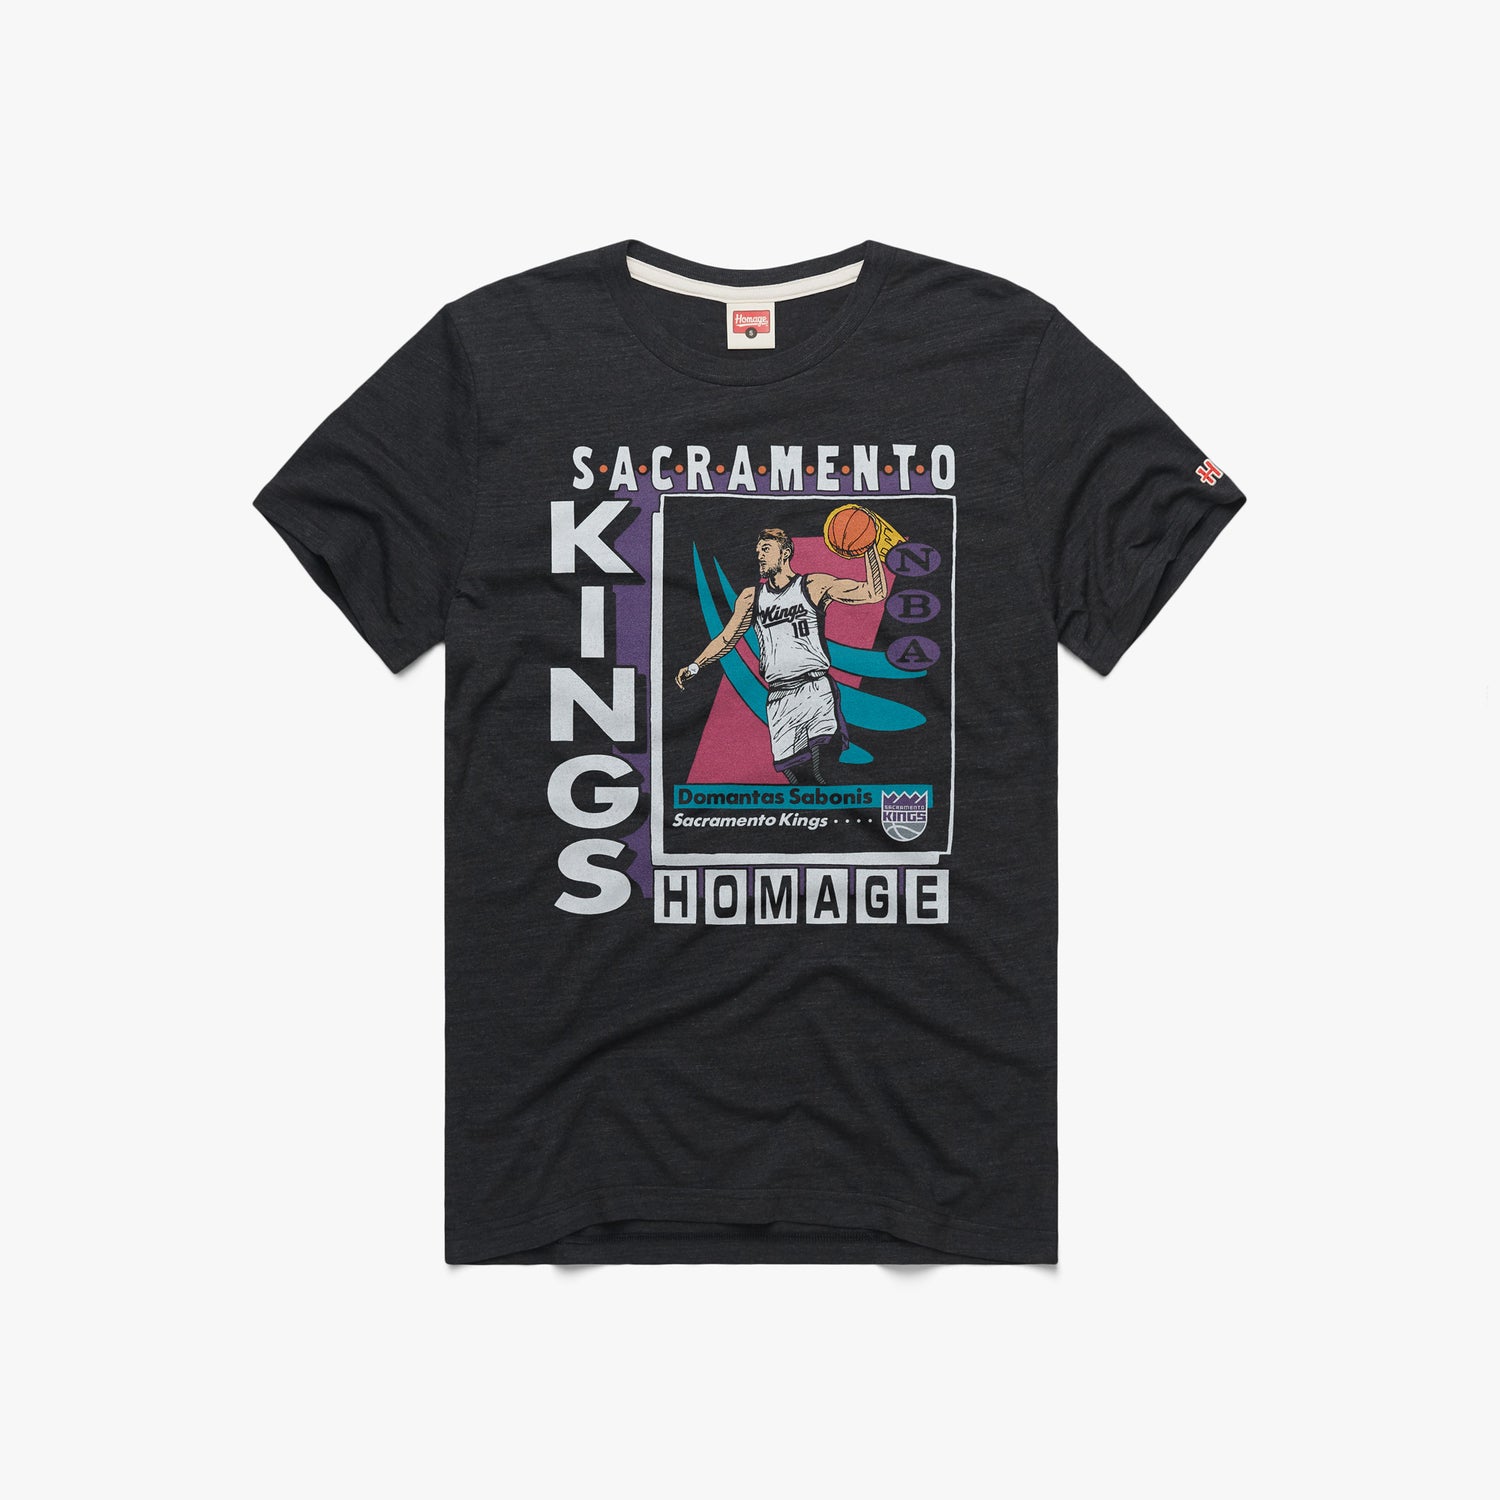 Official sacramento kings trading card domantas sabonis shirt